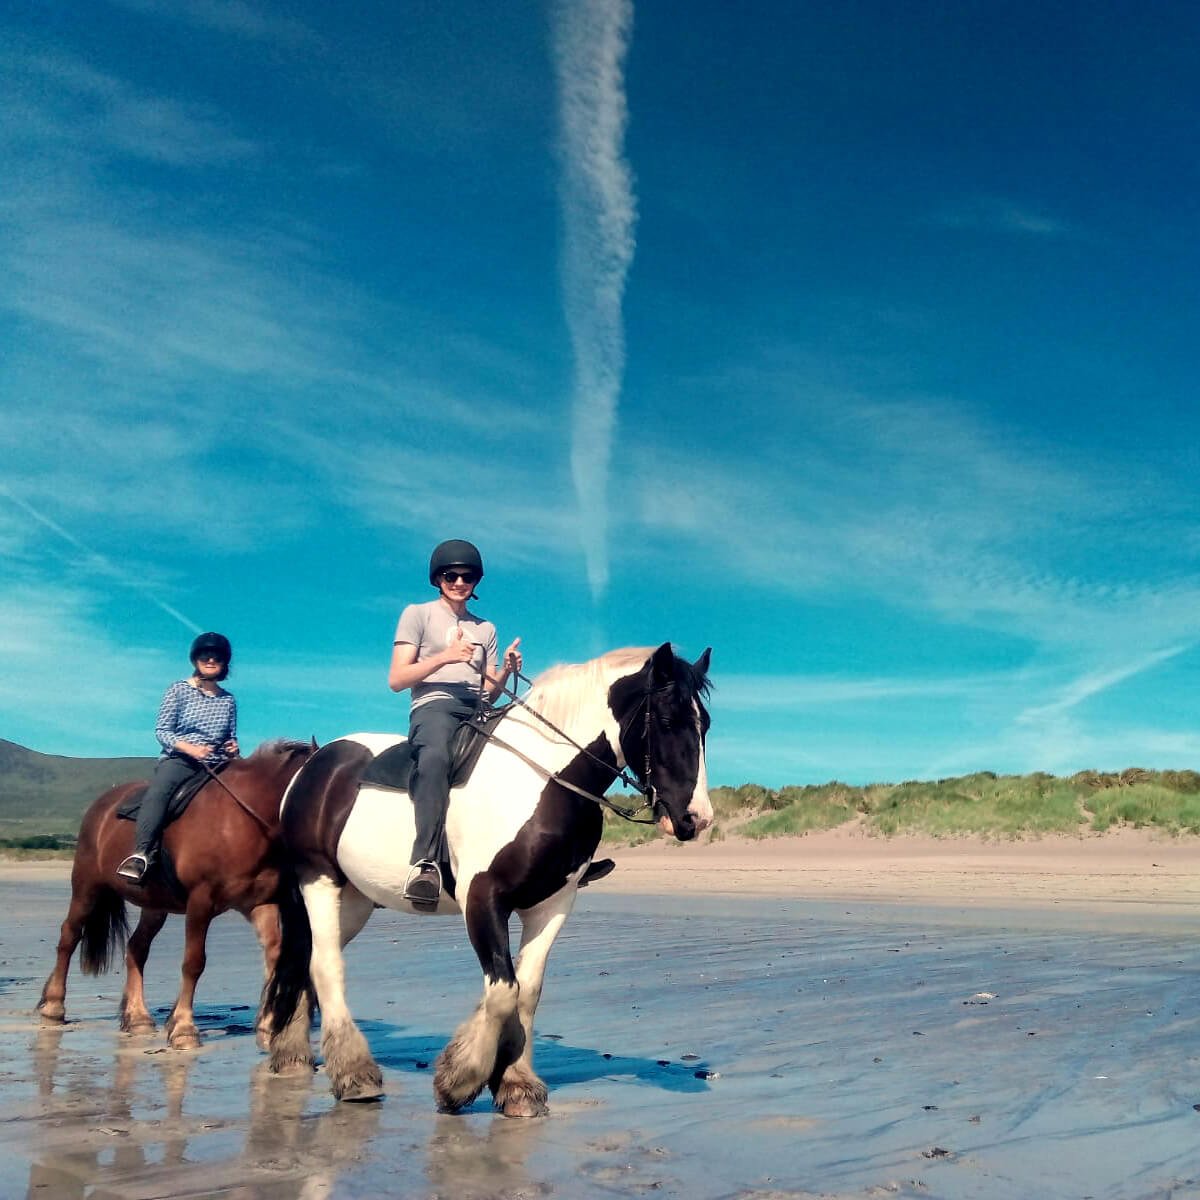 Two horseback riders on a beach in Ireland